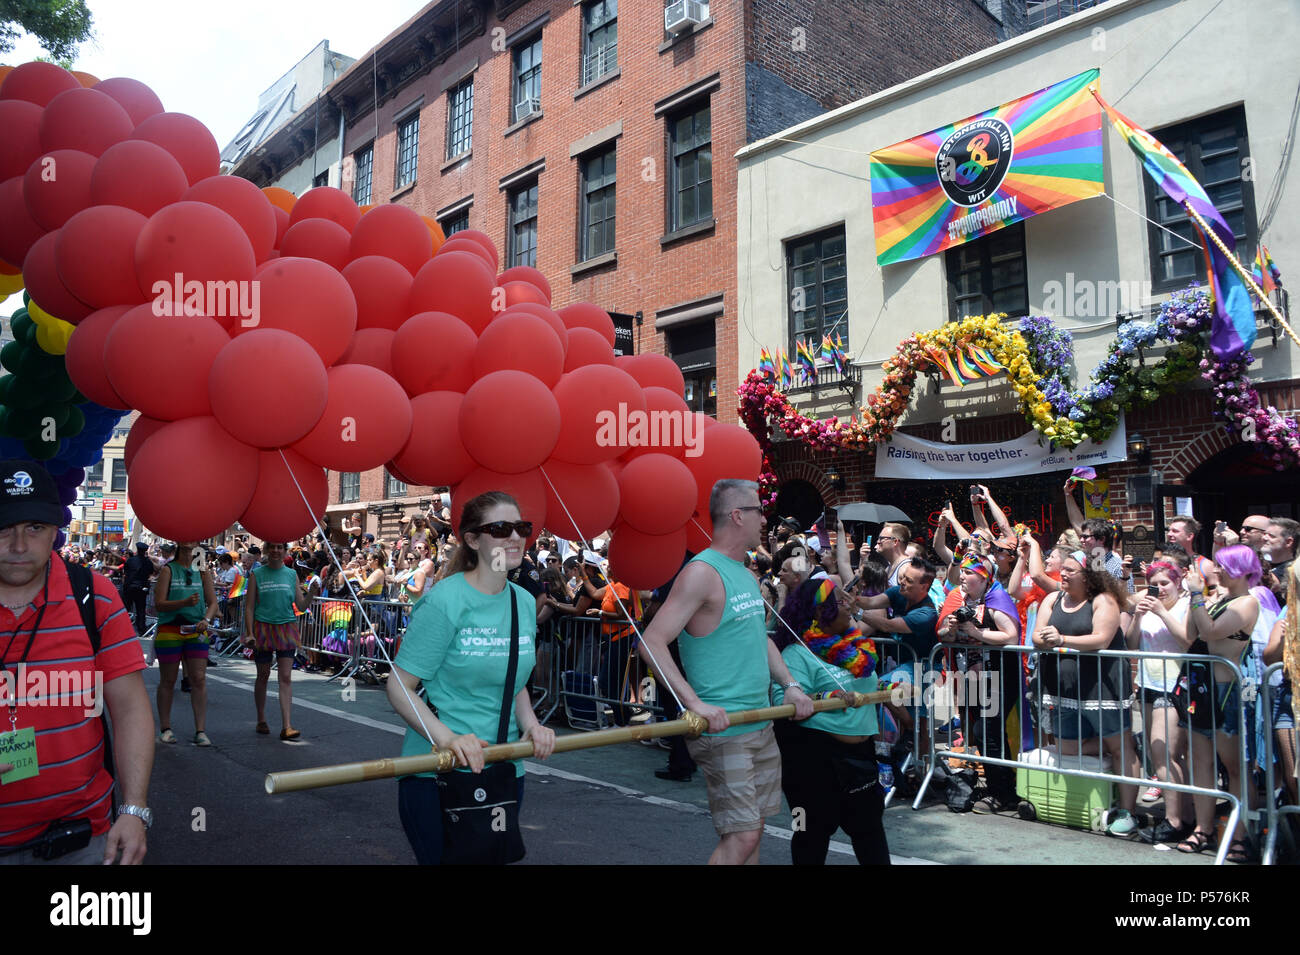 NEW YORK 24 Giugno: atmosfera arriva a NYC Pride marzo a giugno 24, 2018 a New York City. Persone: atmosfera Credito: Hoo-me.com/MediaPunch Foto Stock